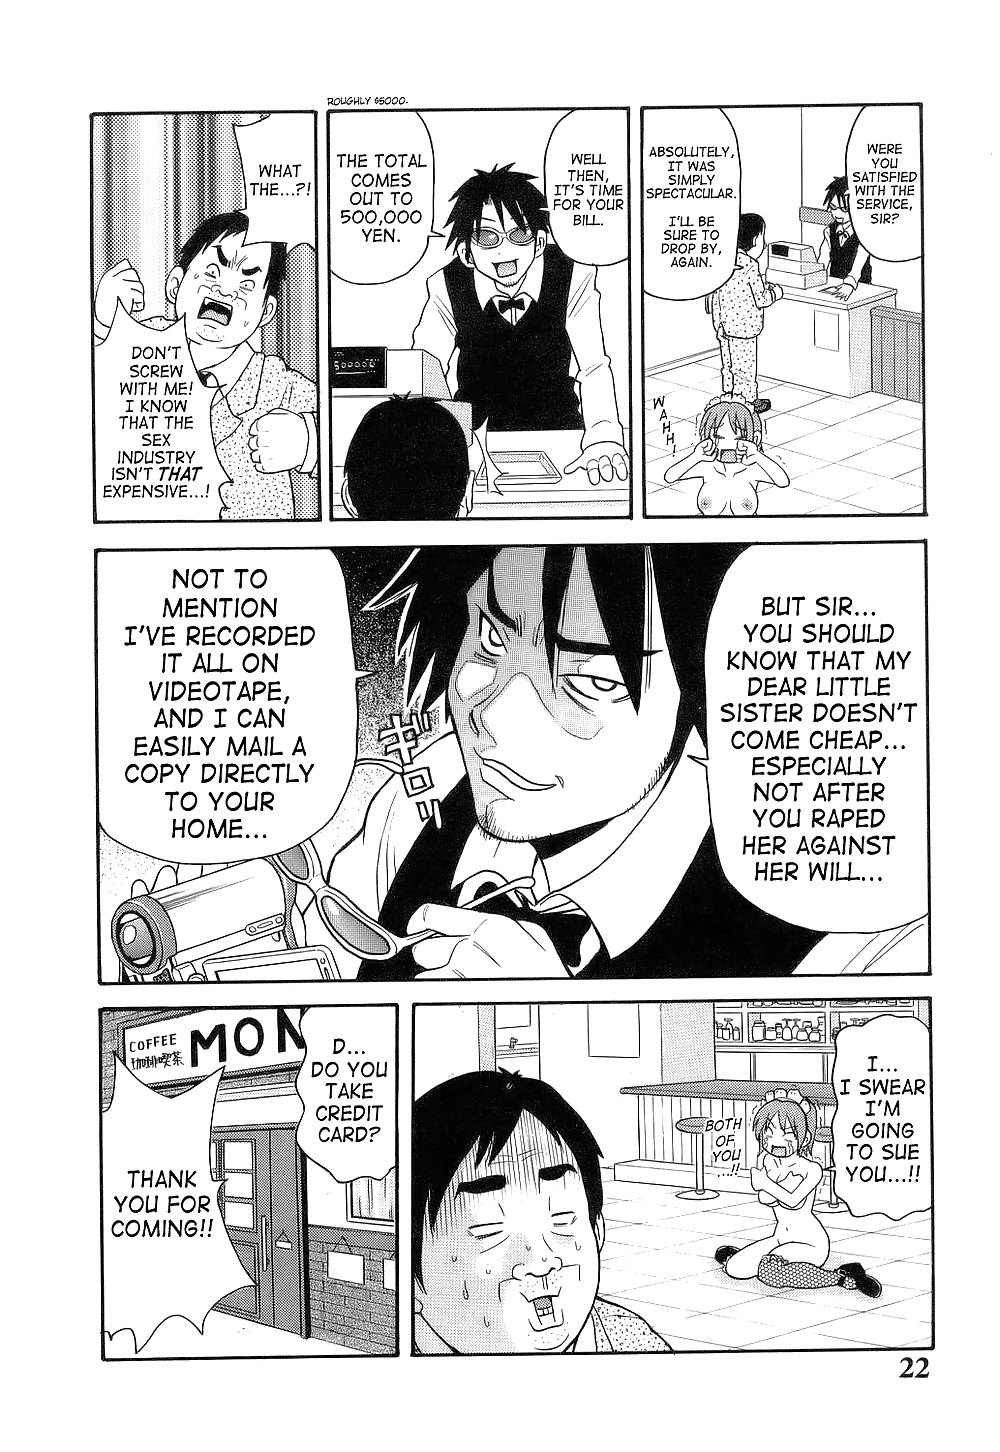 (Hentai Comic) Lassen Sie Uns Mo-Café #20837035